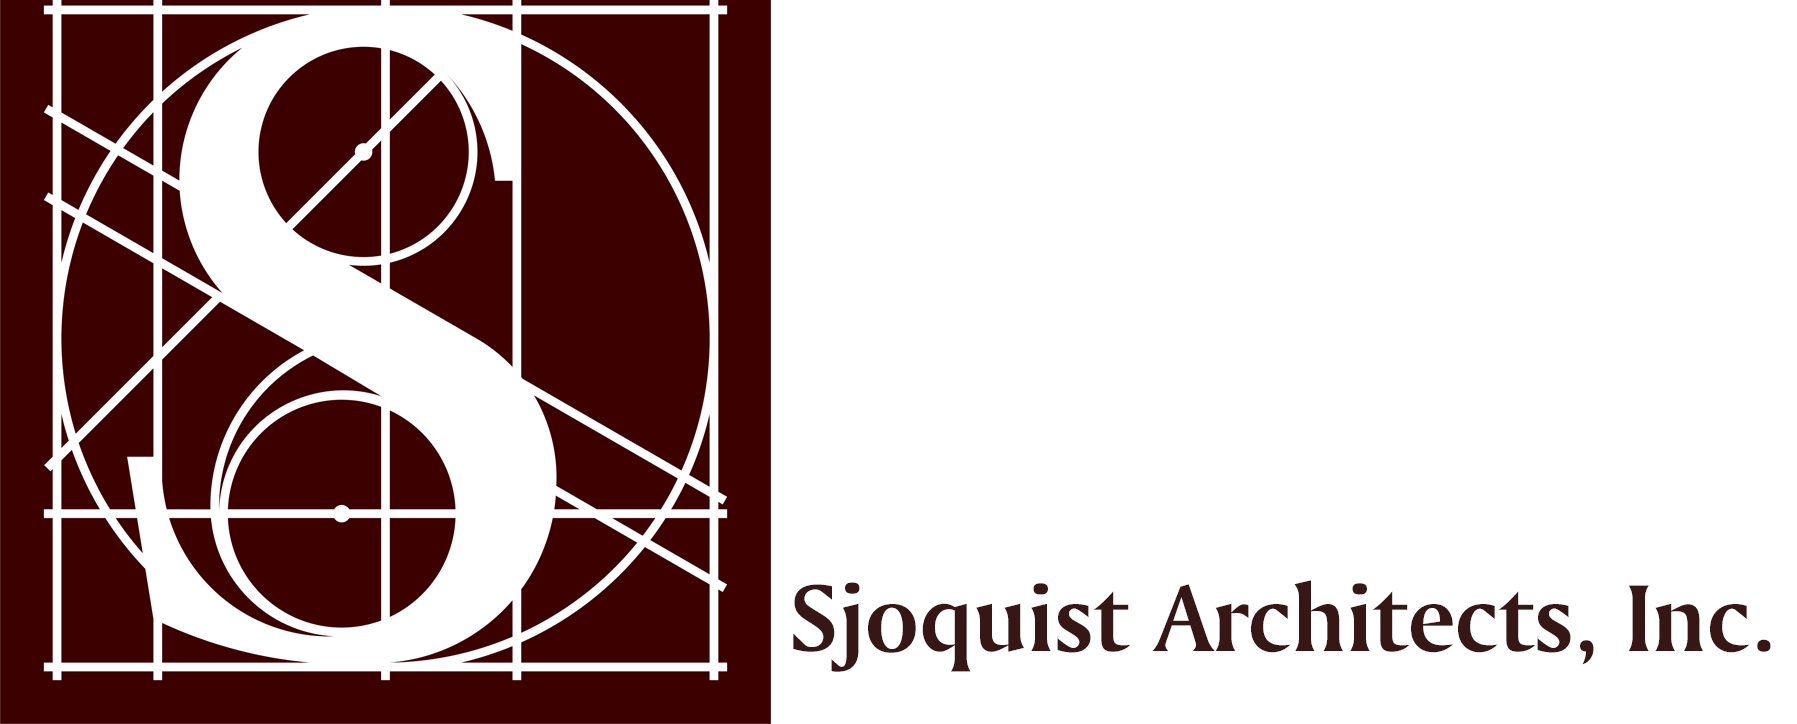 Sjoquist Architects, Inc.